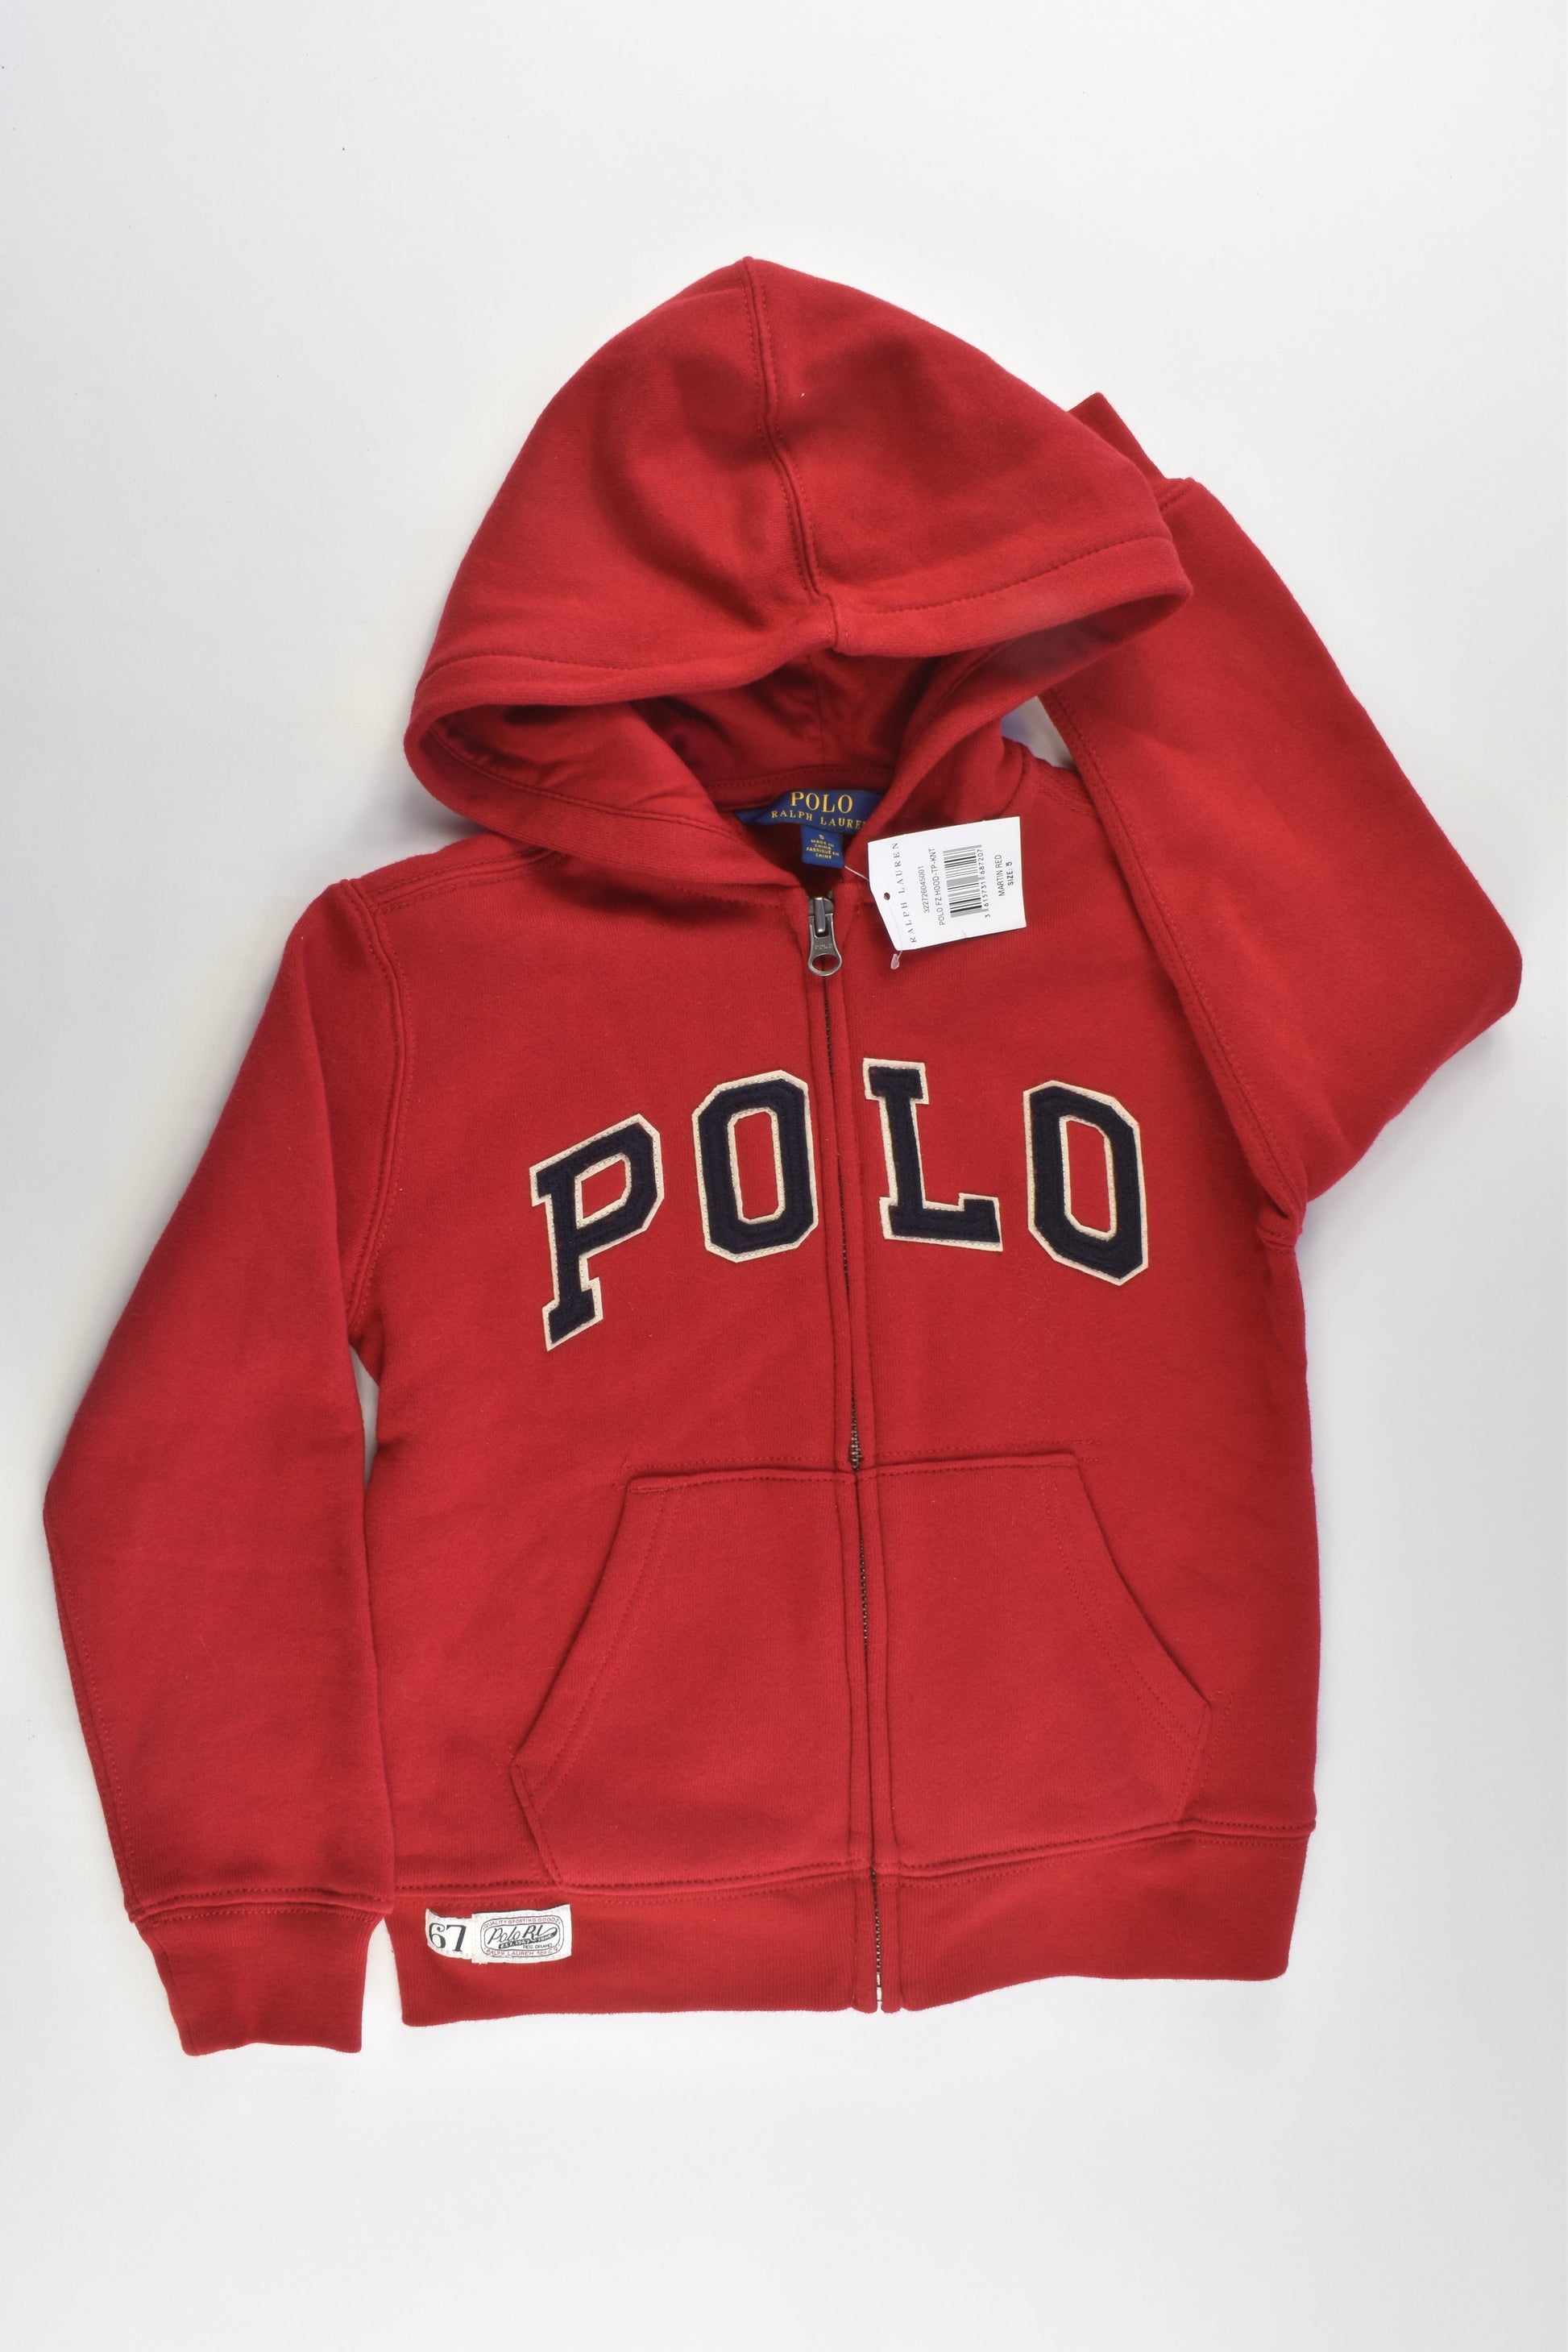 NEW Polo Ralph Lauren Size 5 Hooded Jumper